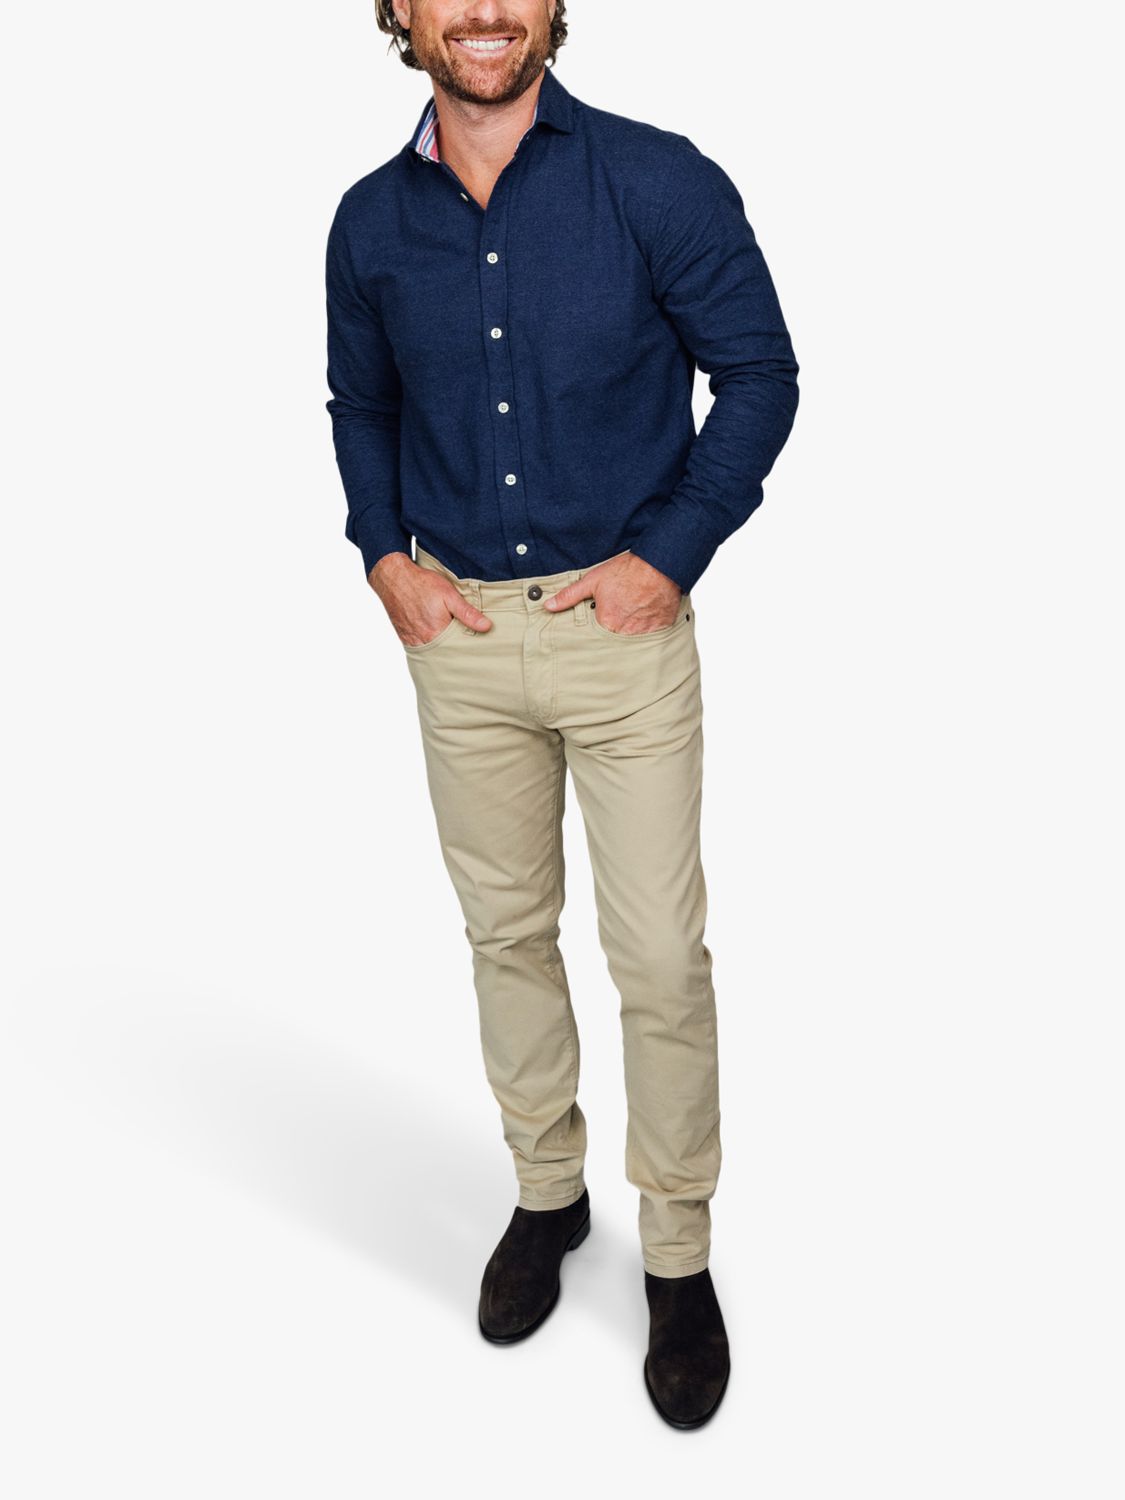 KOY Luxury Cotton Cashmere Blend Shirt, Navy, S